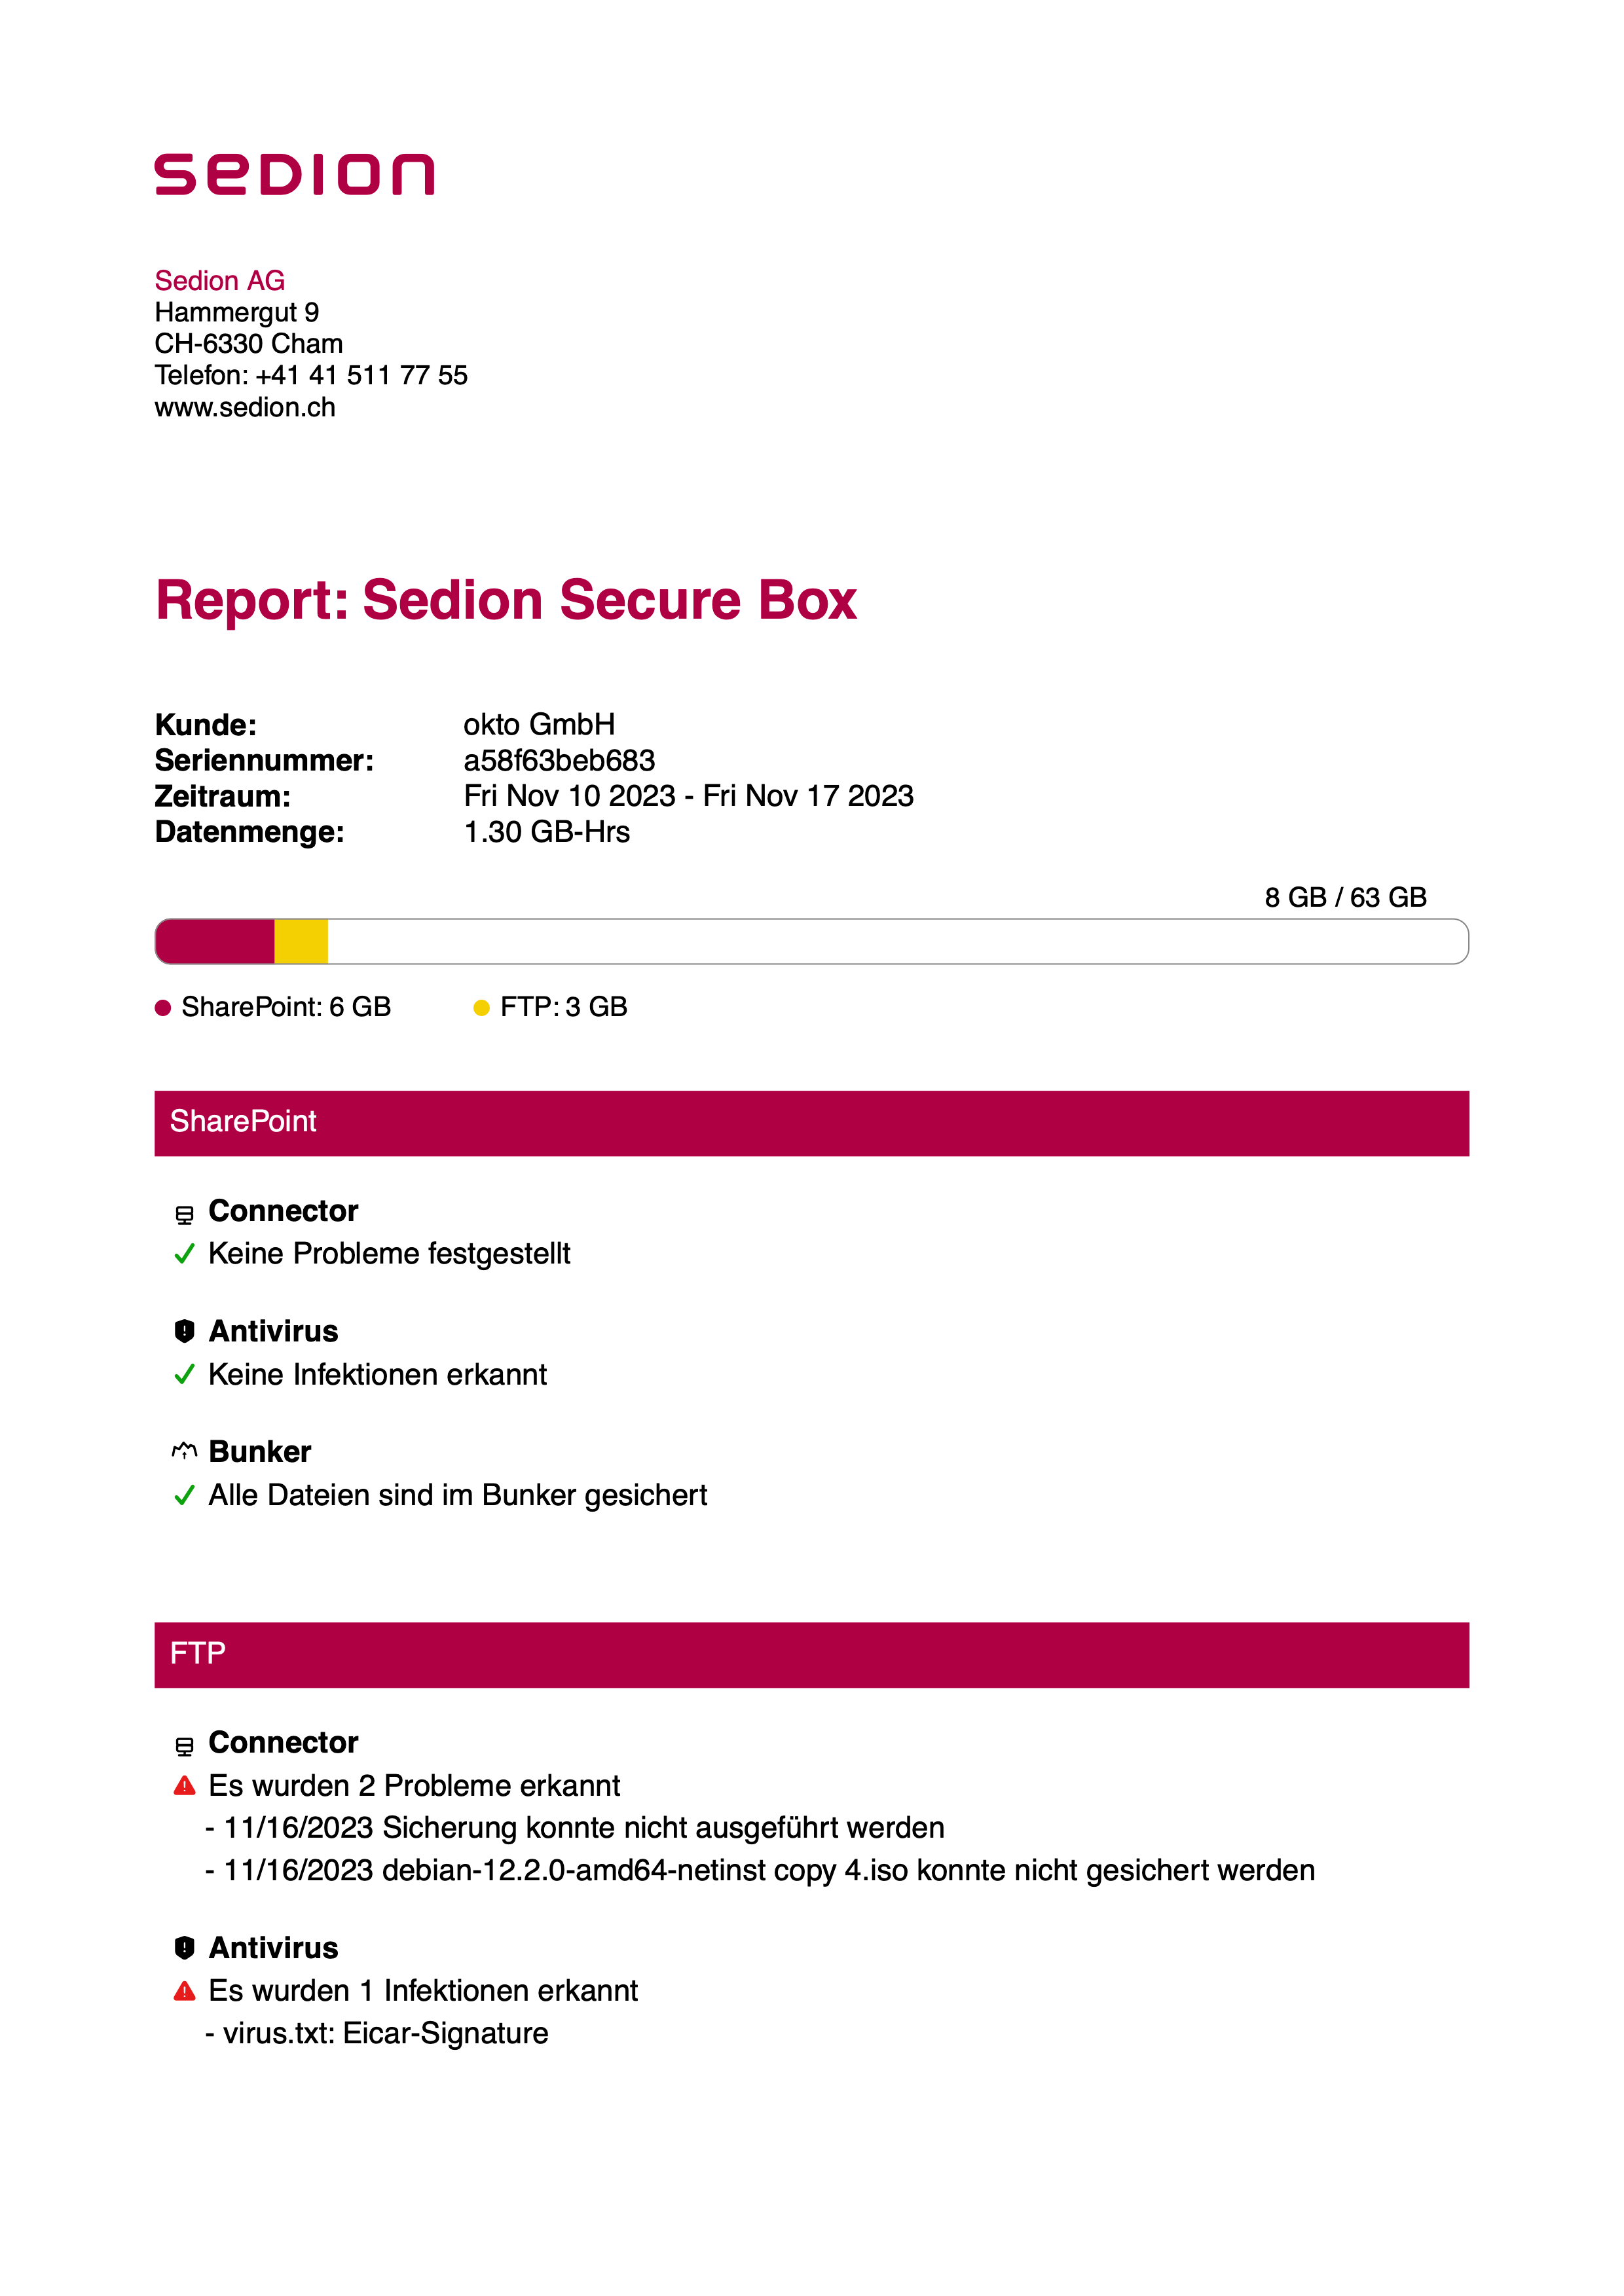 E-Mail Reporting der Sedion Secure Box